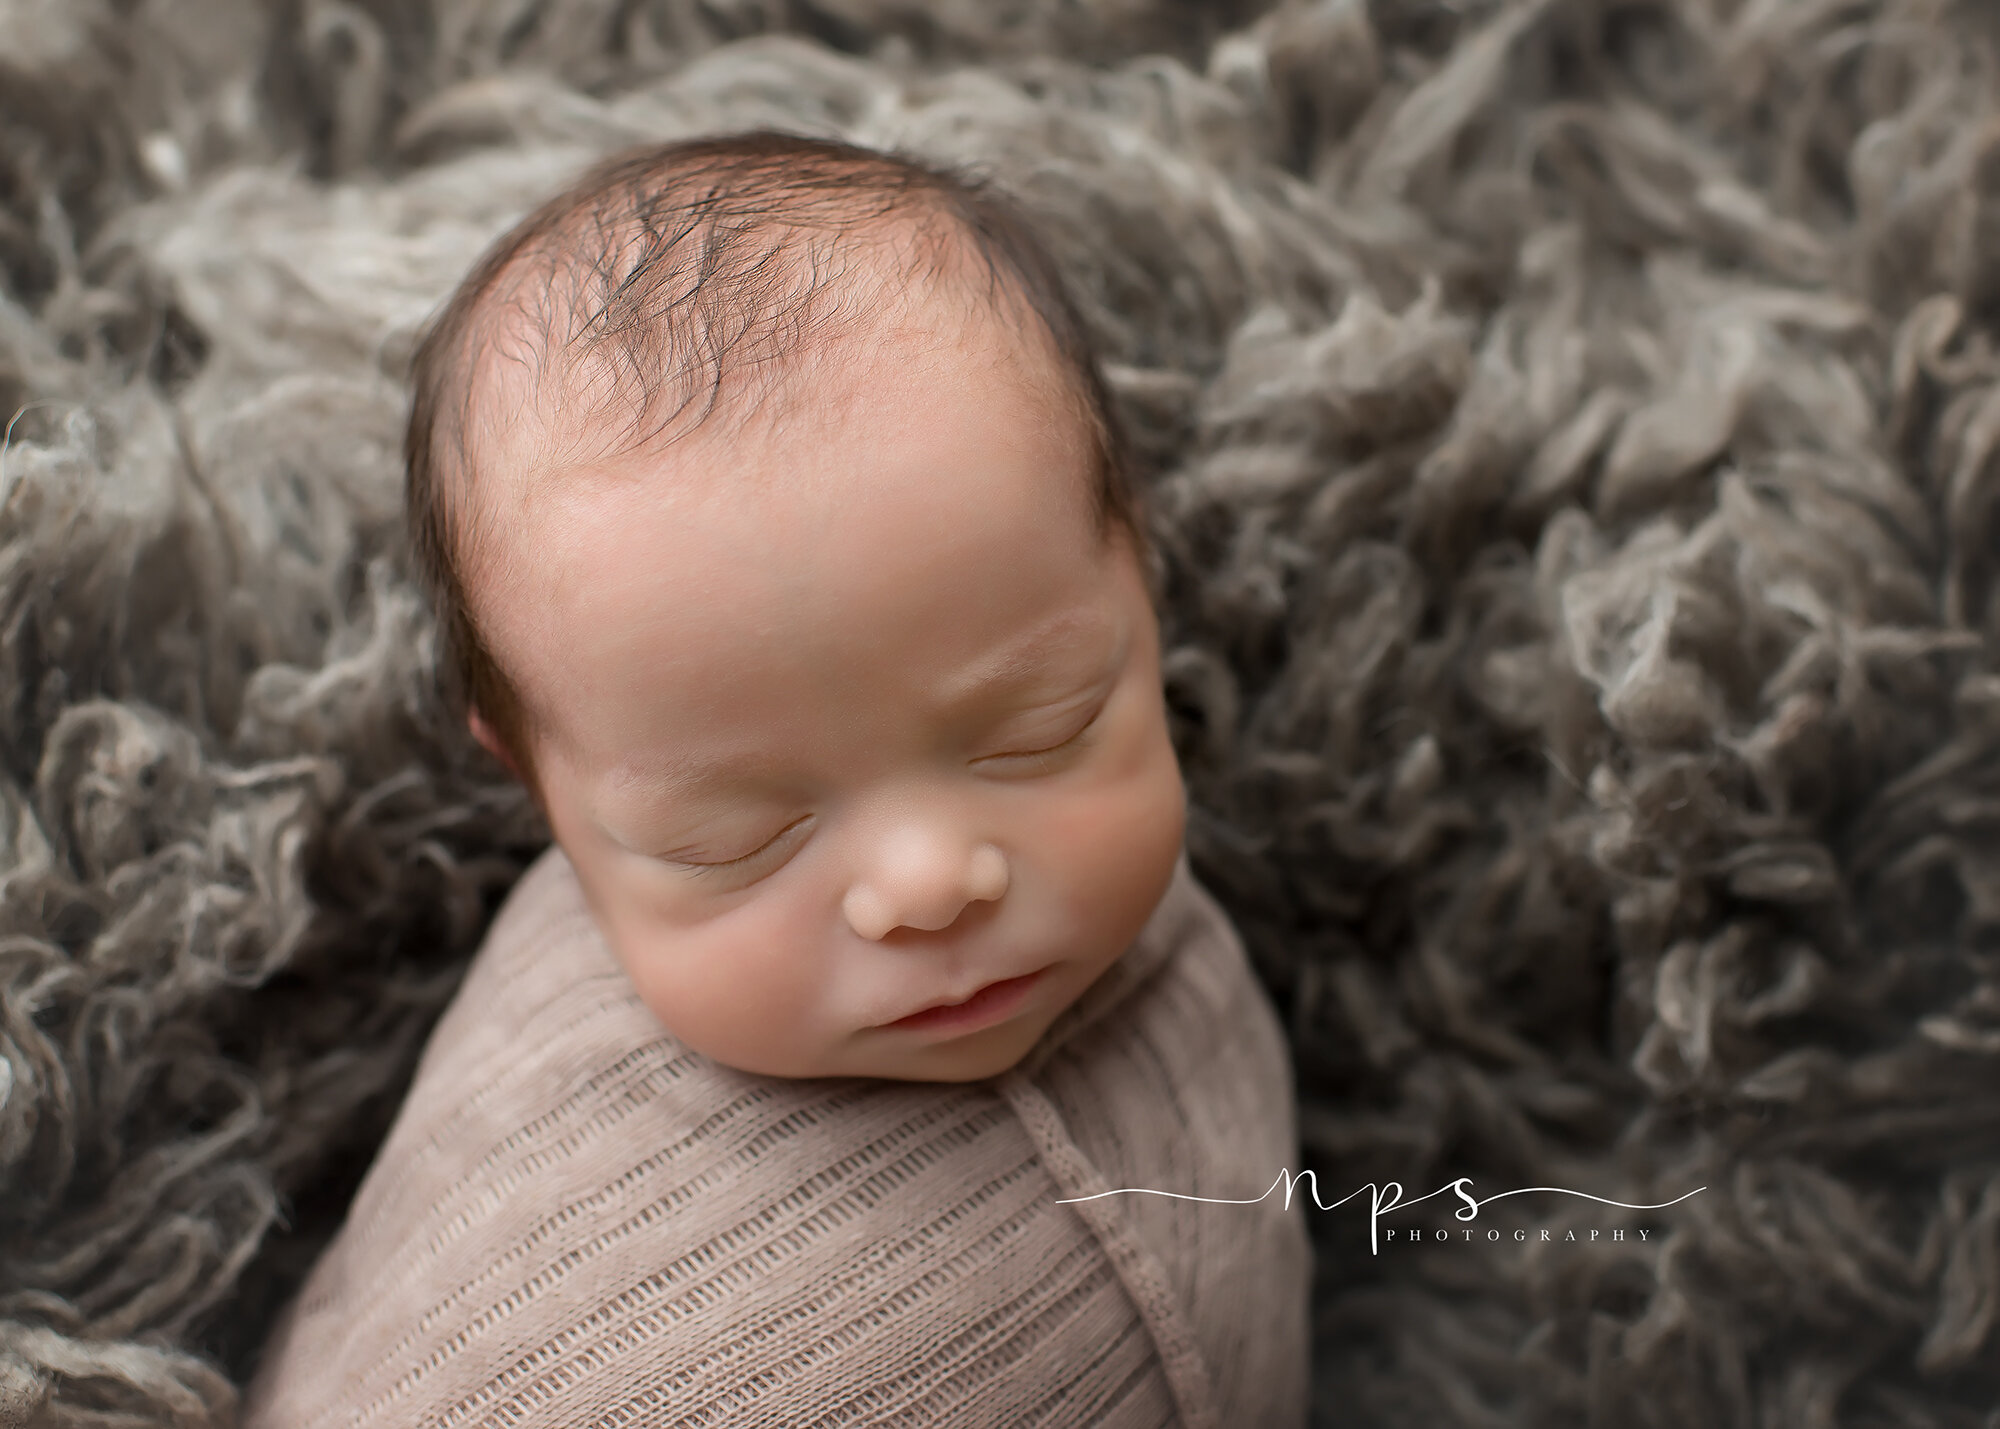 Ft. Bragg Newborn Photographer - NPS Photography